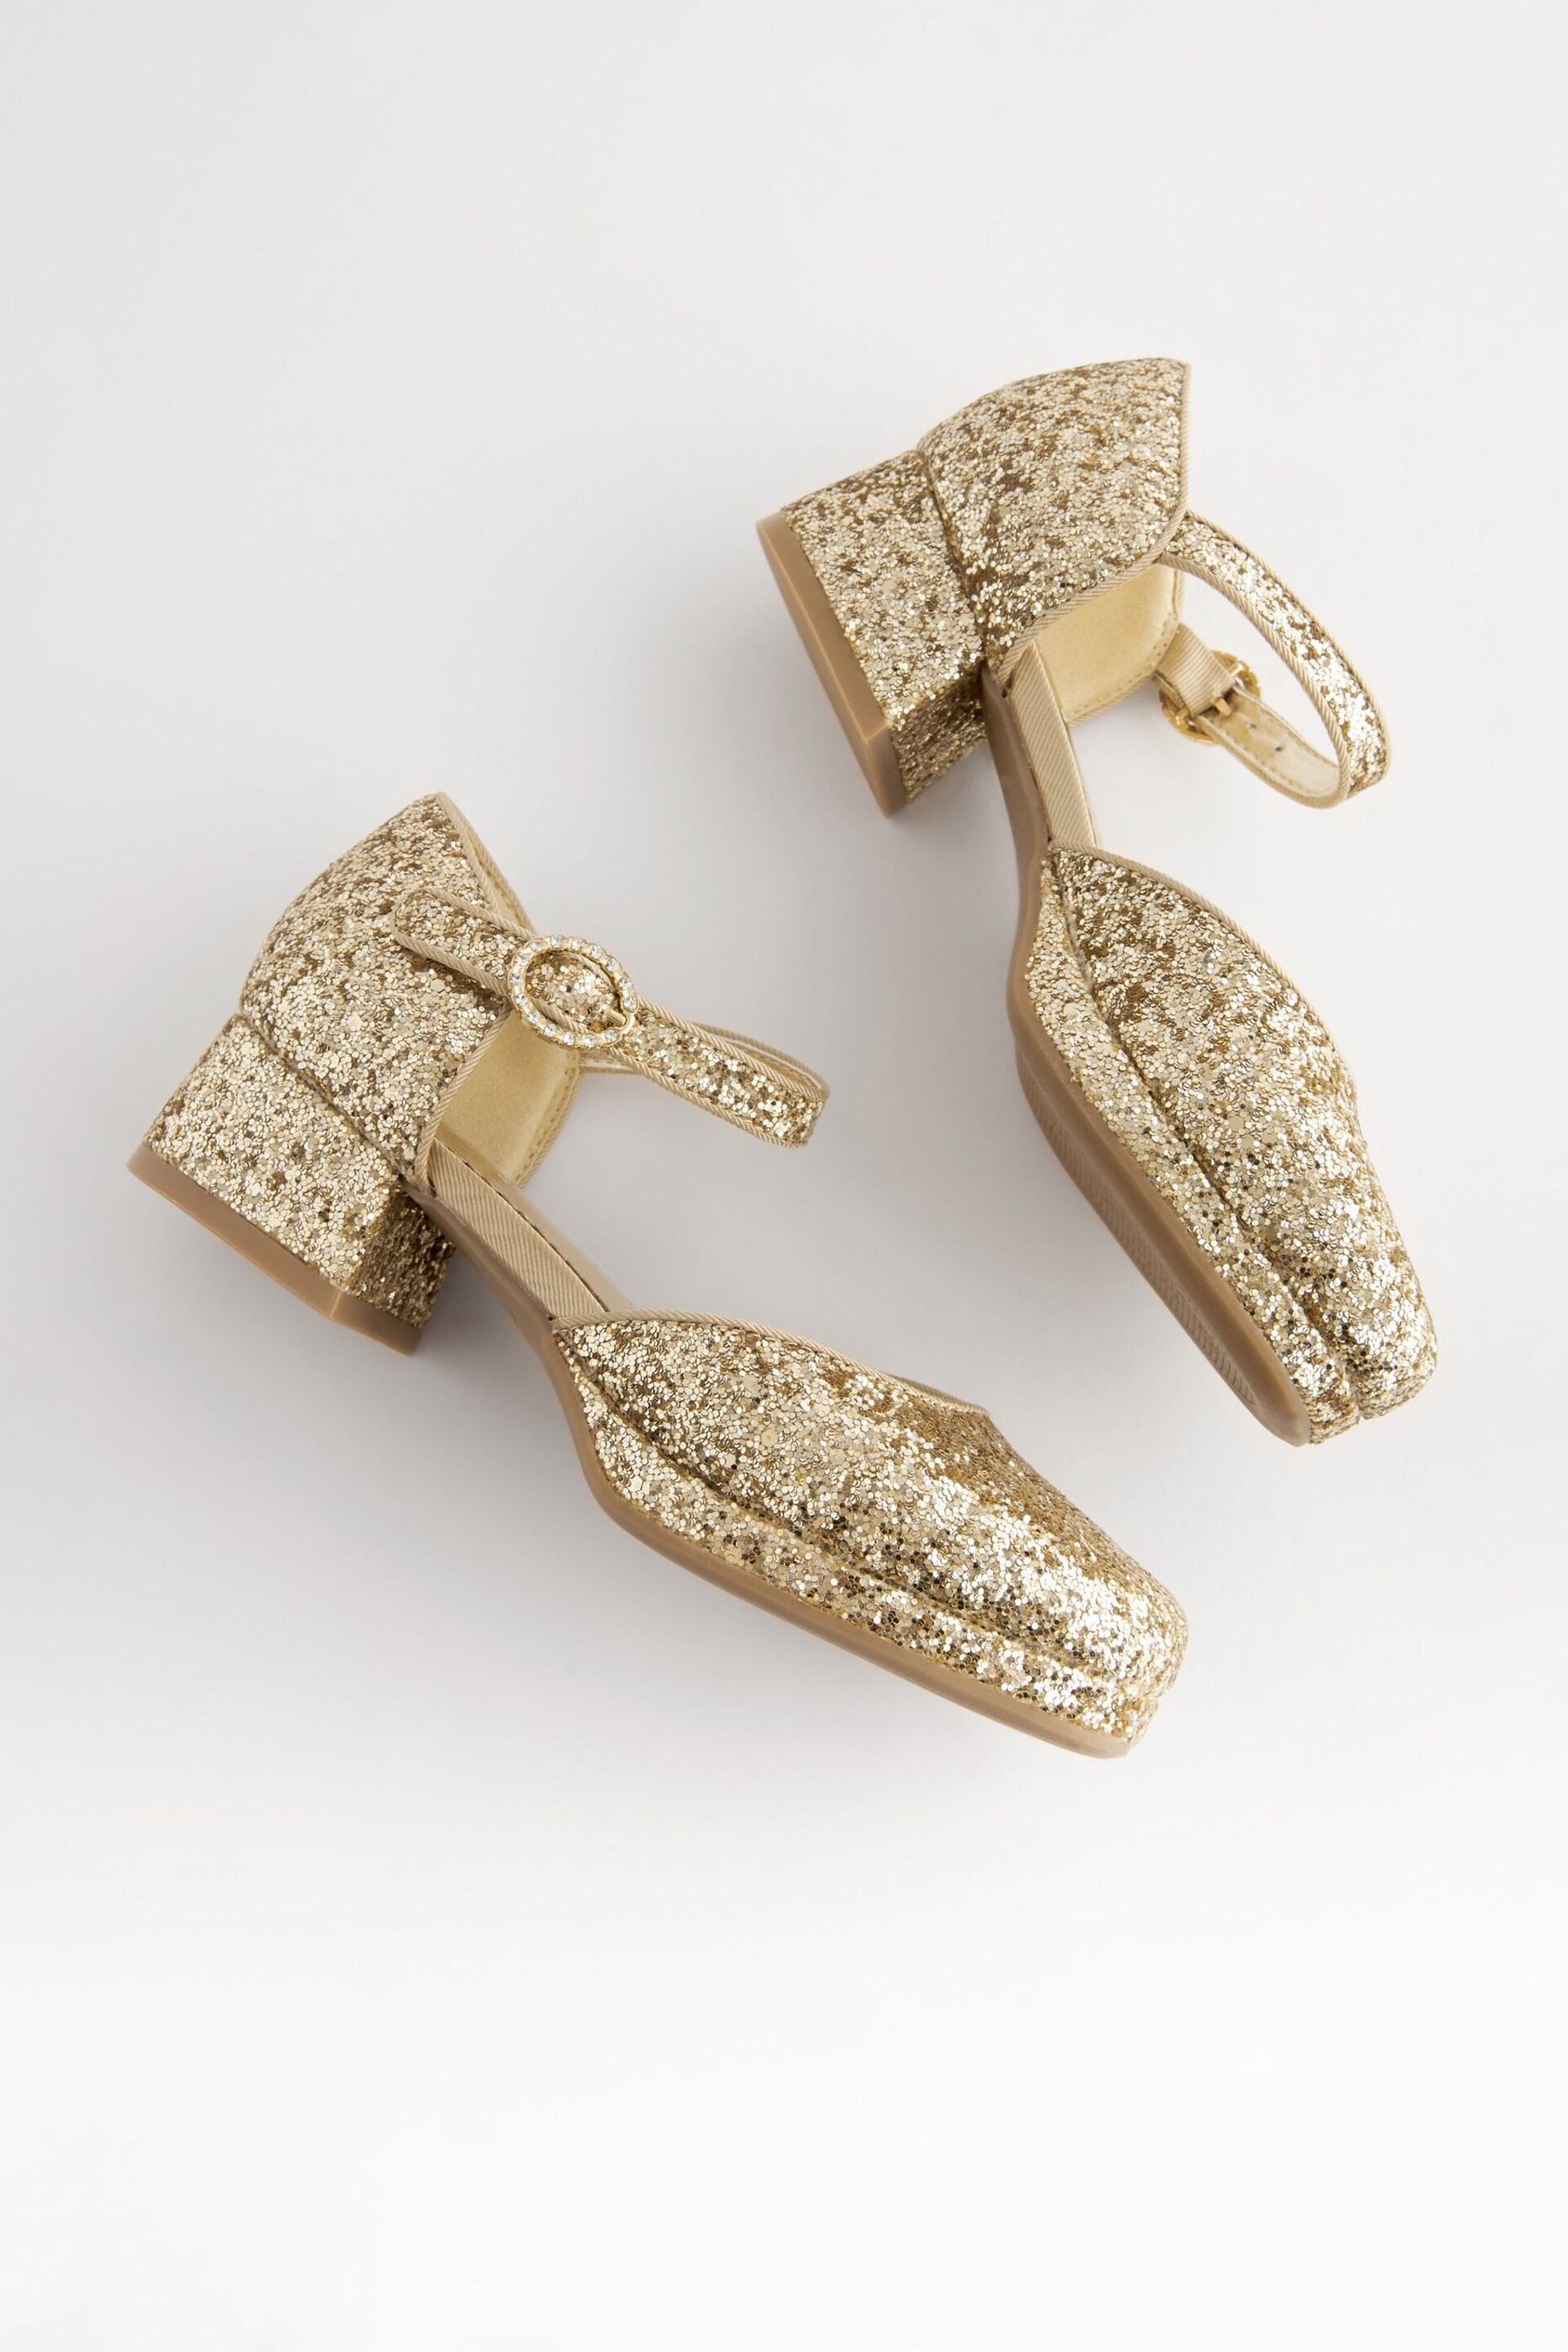 Gold Glitter Platform Heel Occasion Shoes - Image 6 of 6